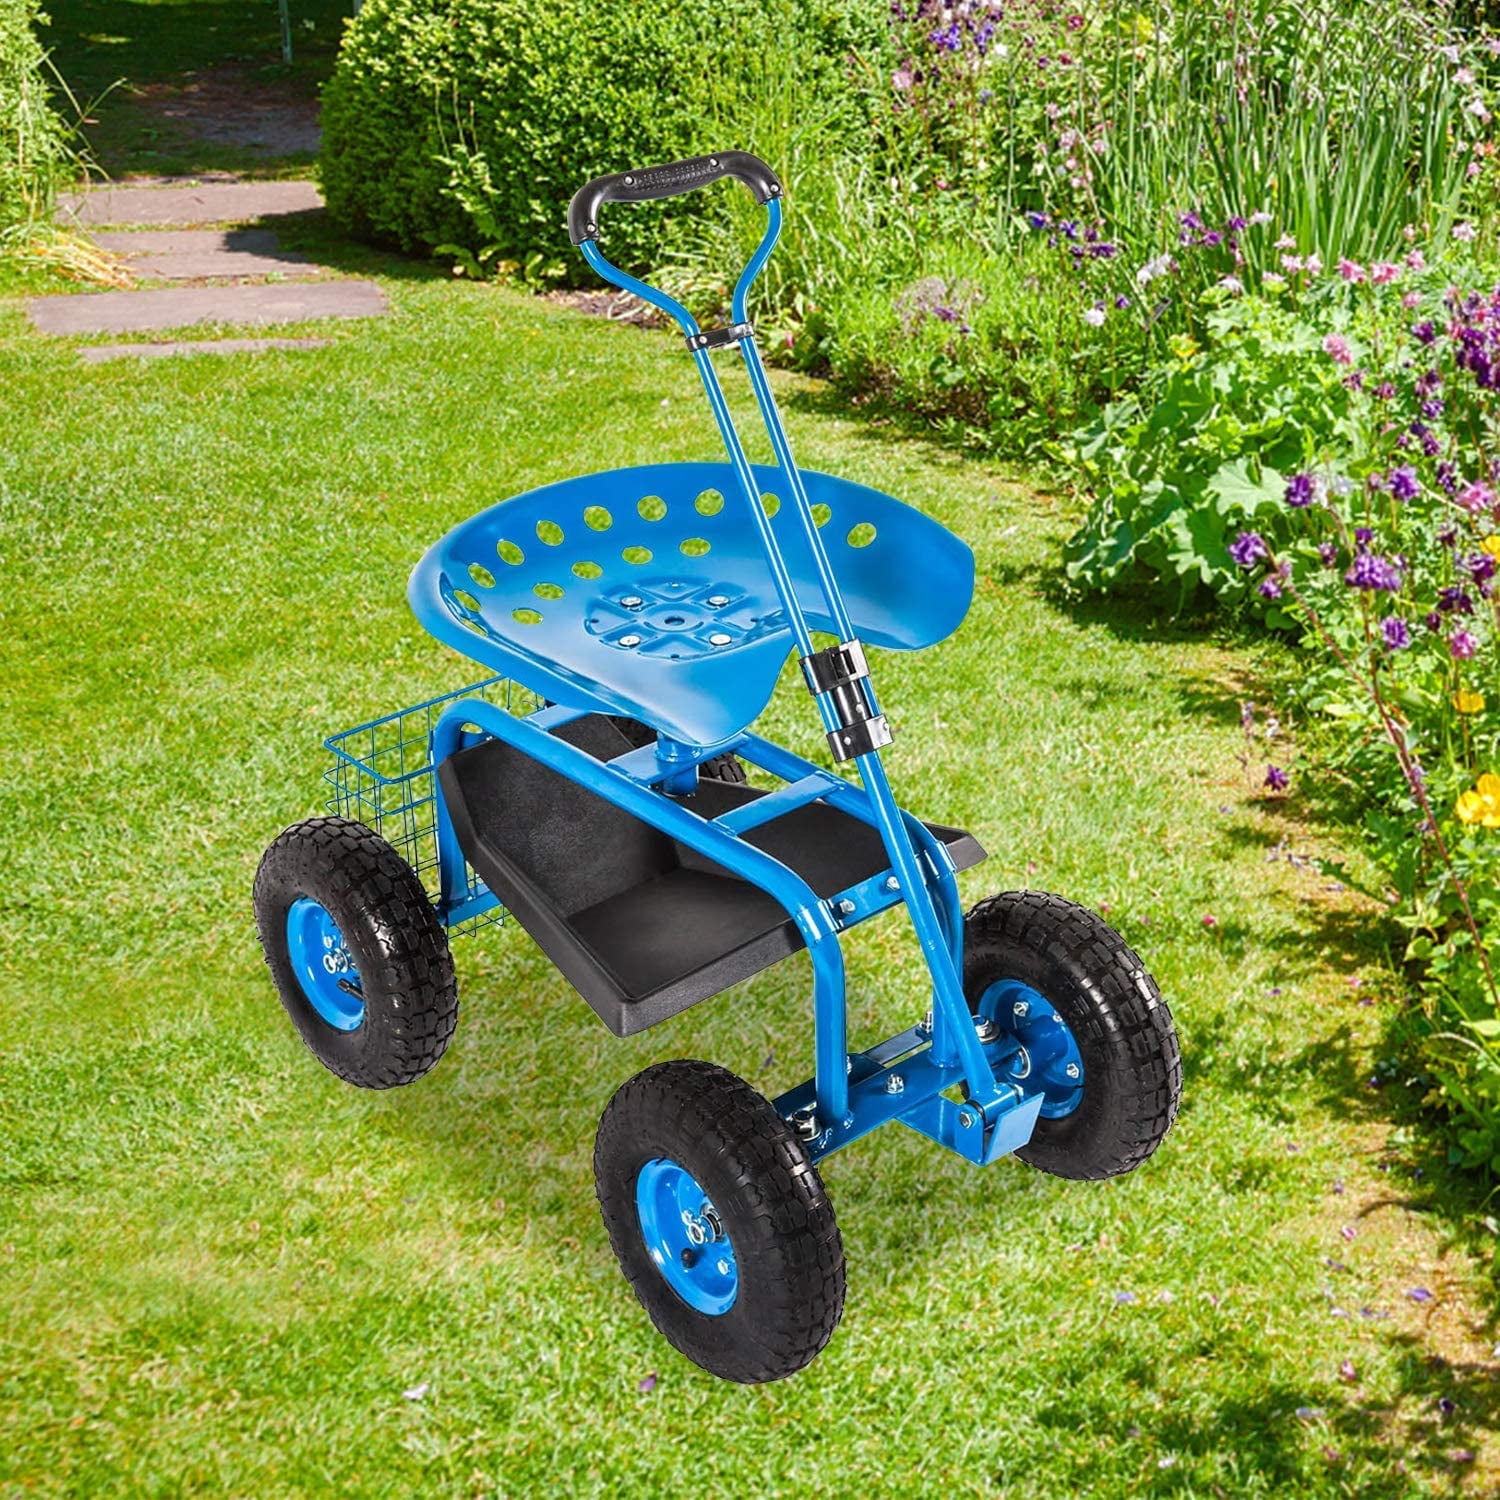 Kinsuite Garden Hauling Cart Rolling Work Seat Outdoor Utility Lawn Yard Patio Utility Cart 310 Lbs Load Capacity Adjustable Handle 360 Degree Swivel Seat Blue 